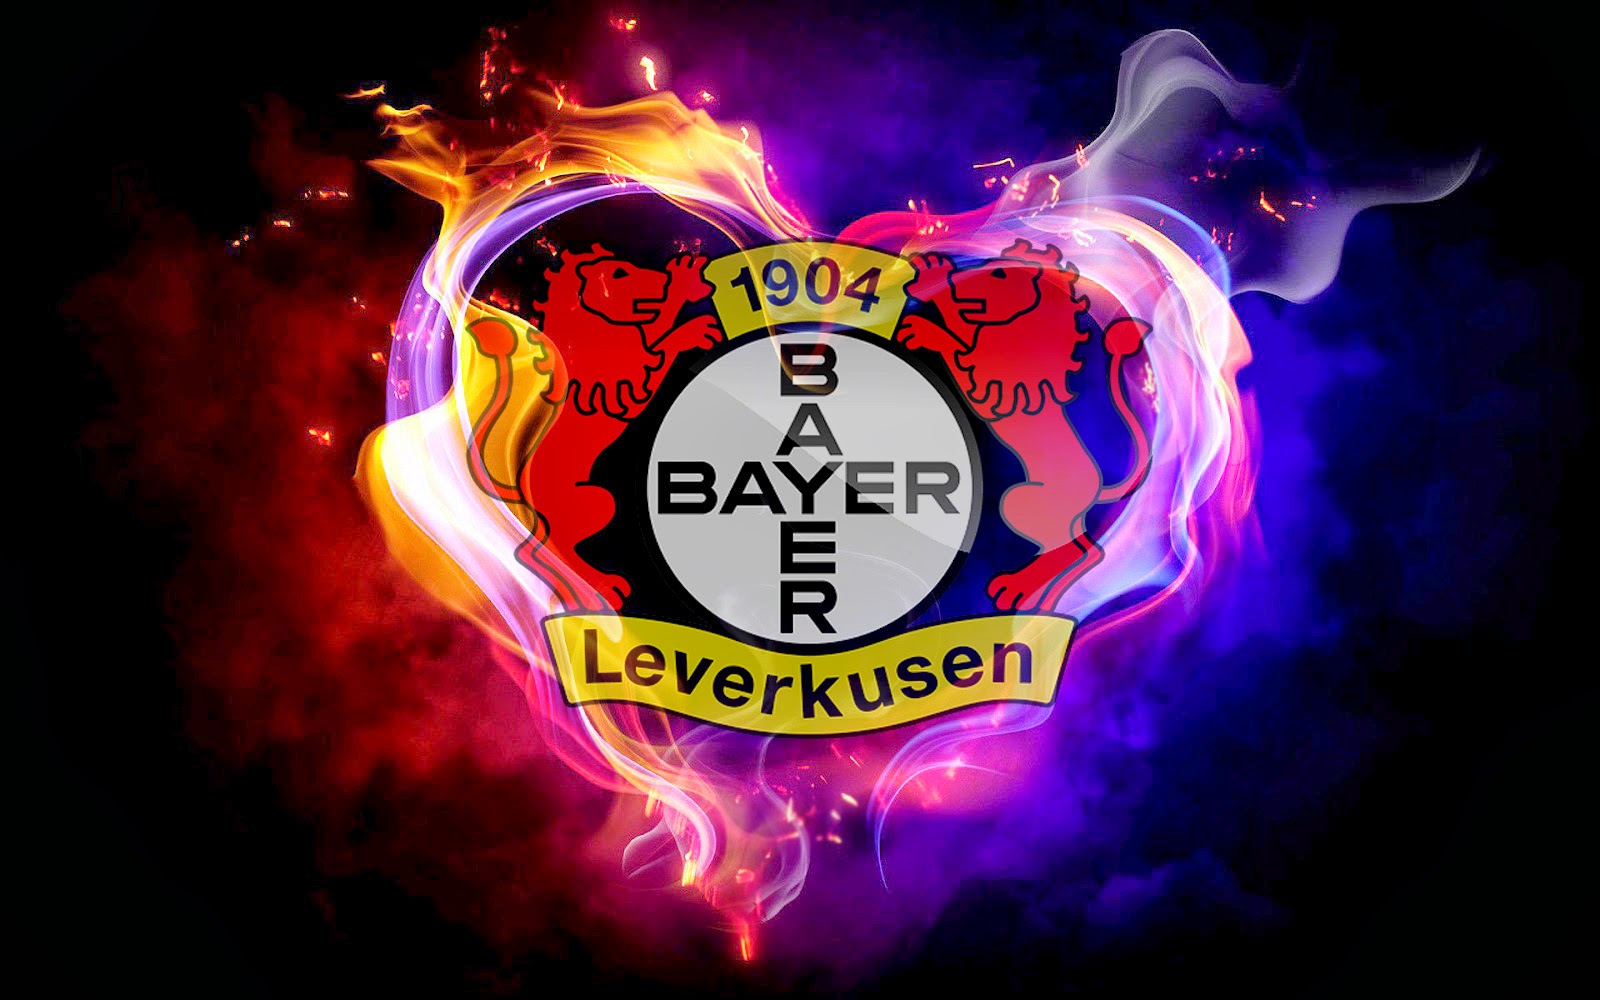 Free download Bayer 04 Leverkusen Wallpaper 17 1024 X 768 stmednet ...